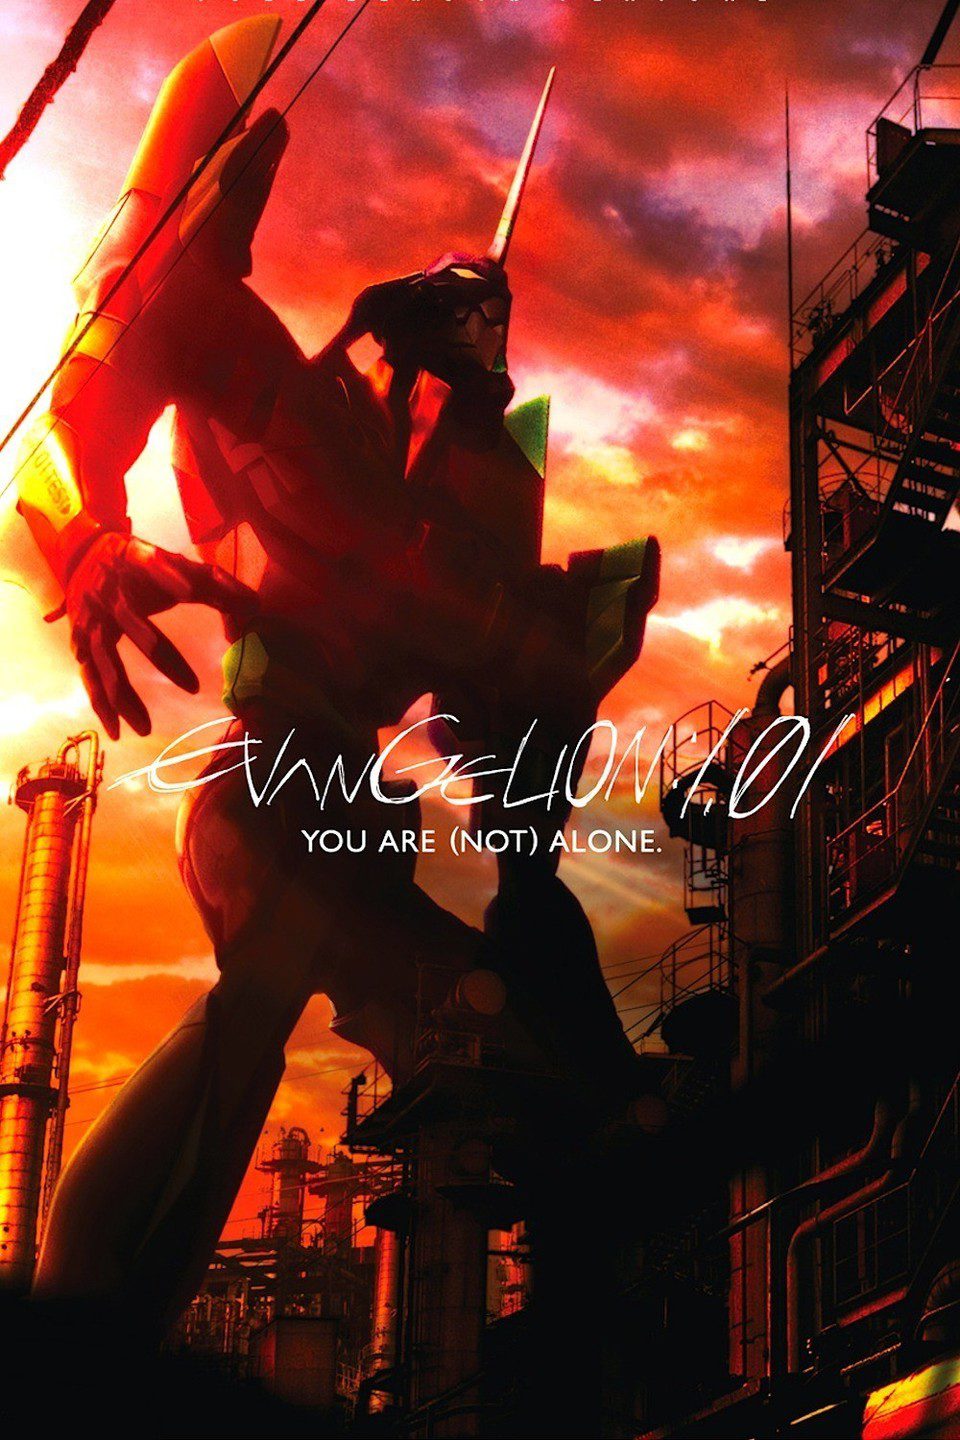 Cartel de Evangelion 1.01 You are (not) Alone - Estados Unidos